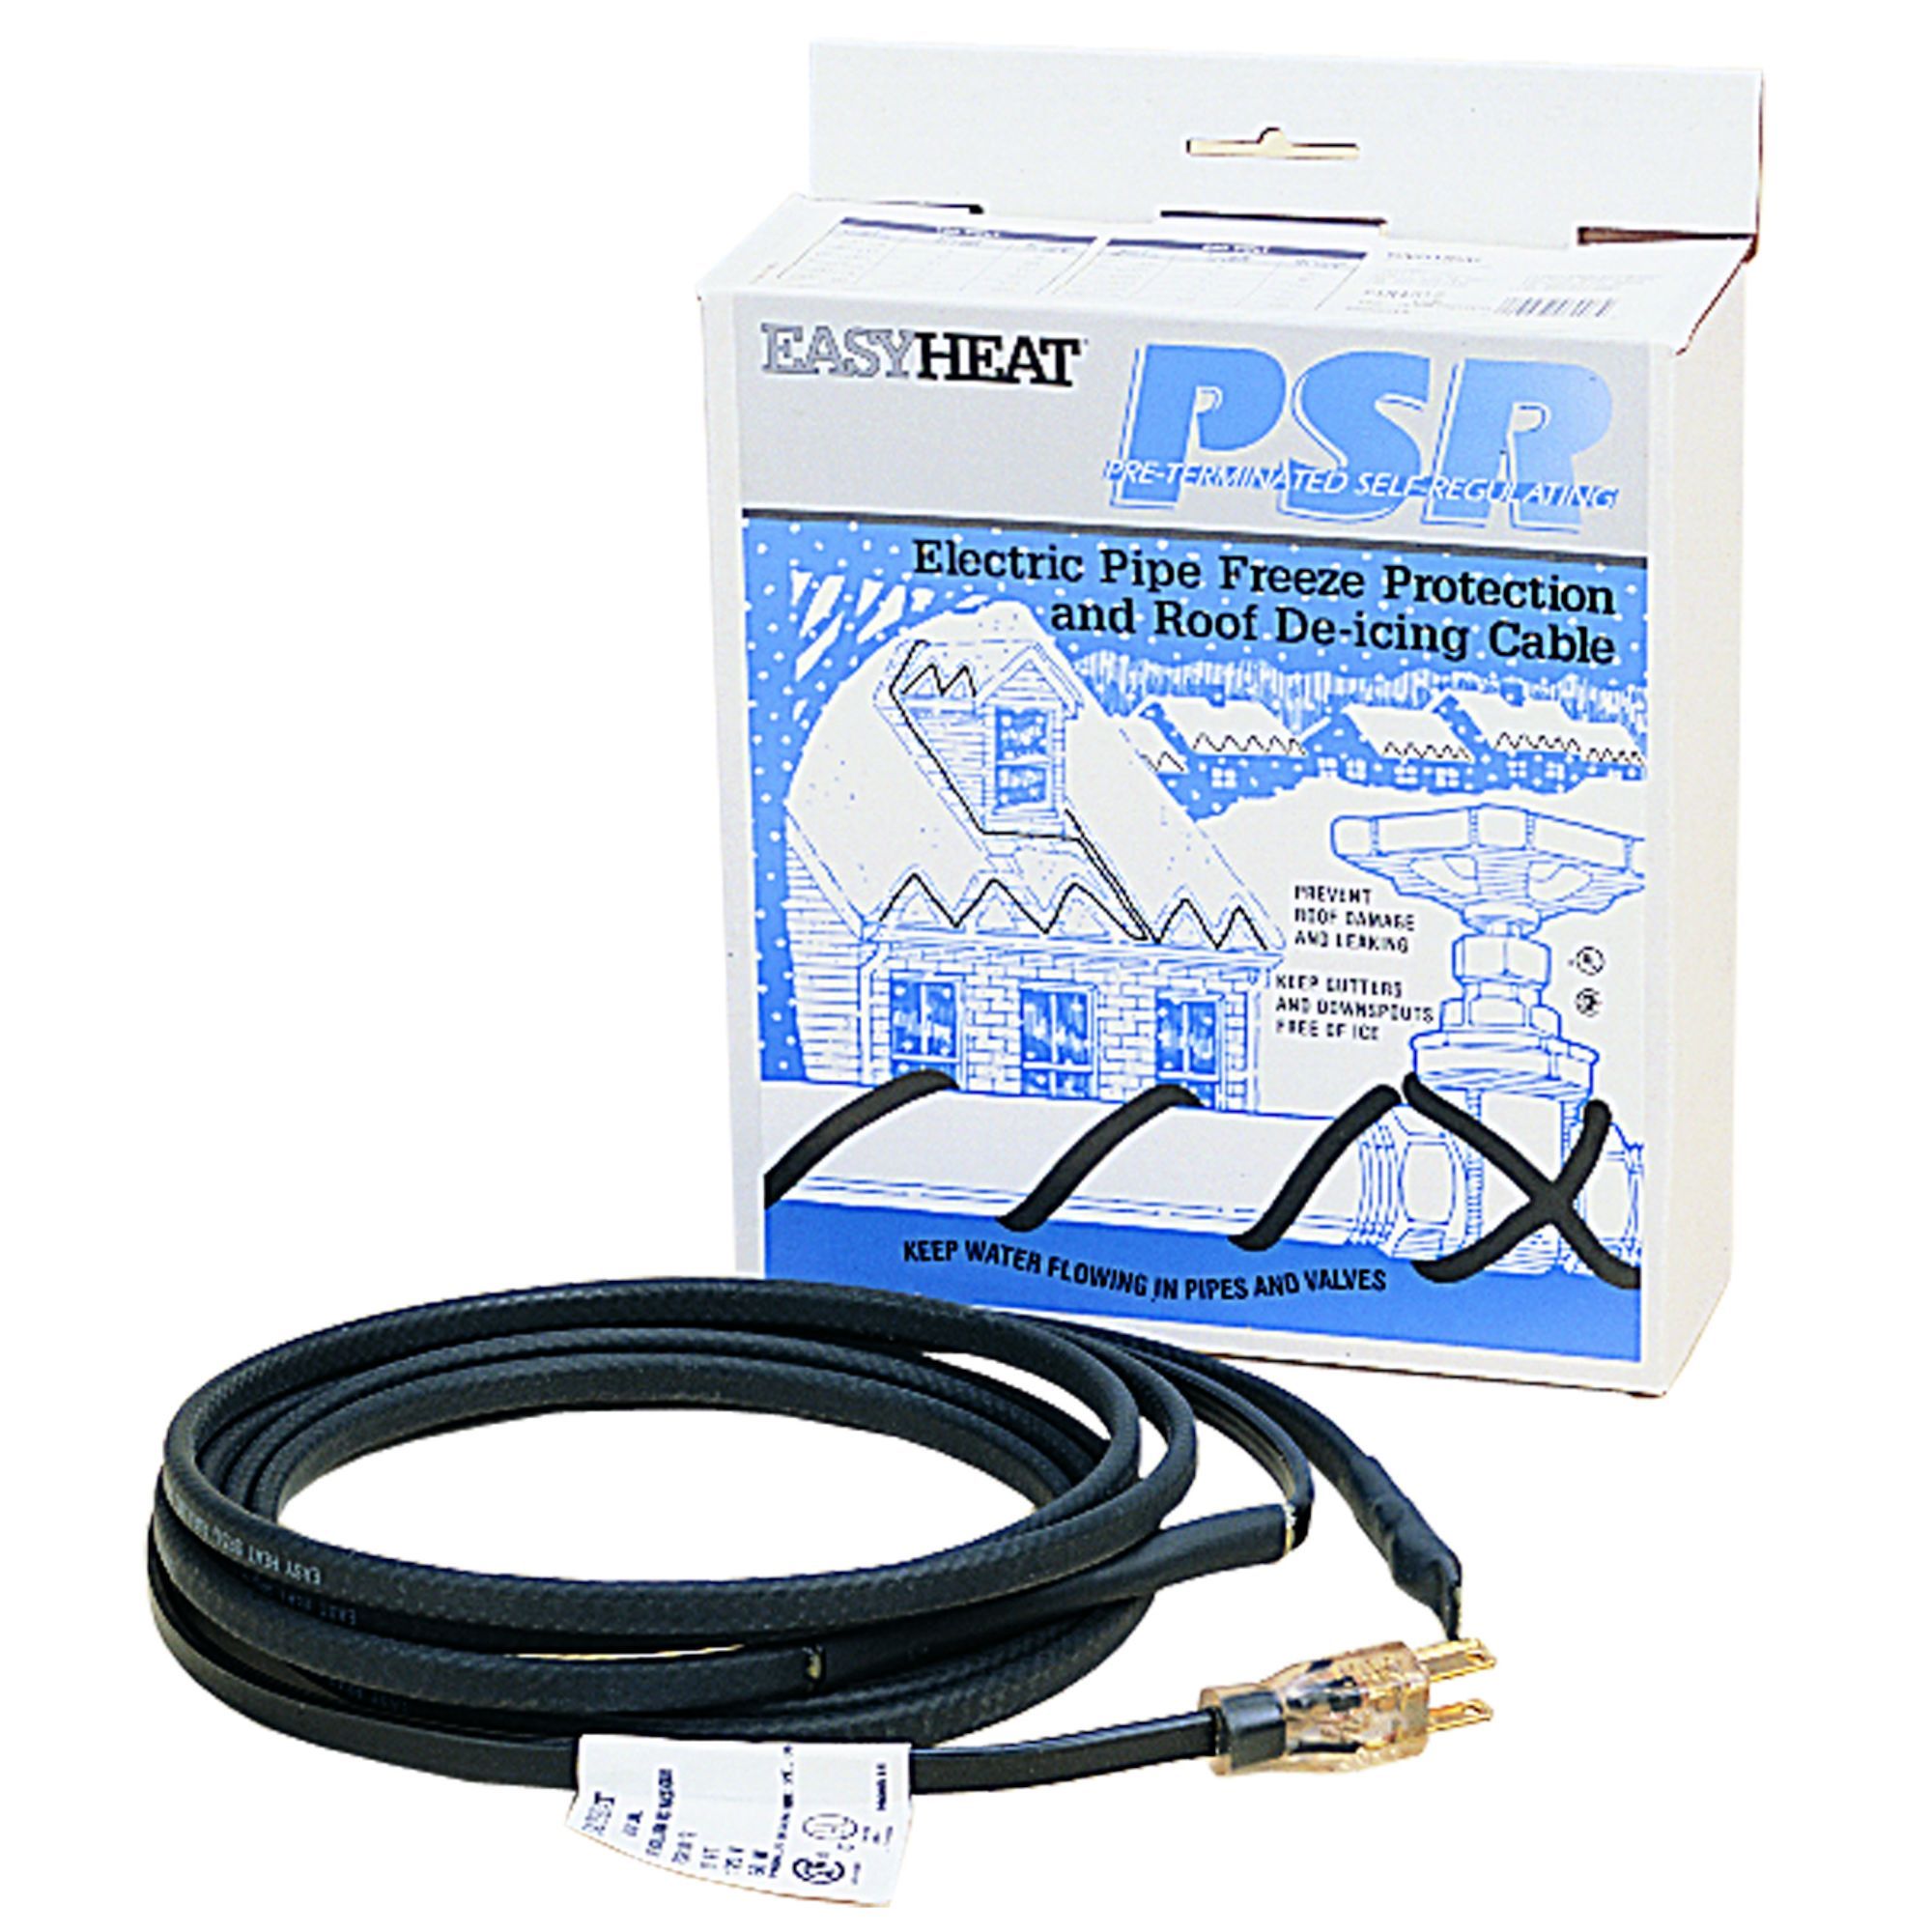 Провод айс. Ice кабель. Santo self-regulating heating Cables. EASYHEAT 505. Easy Heat.